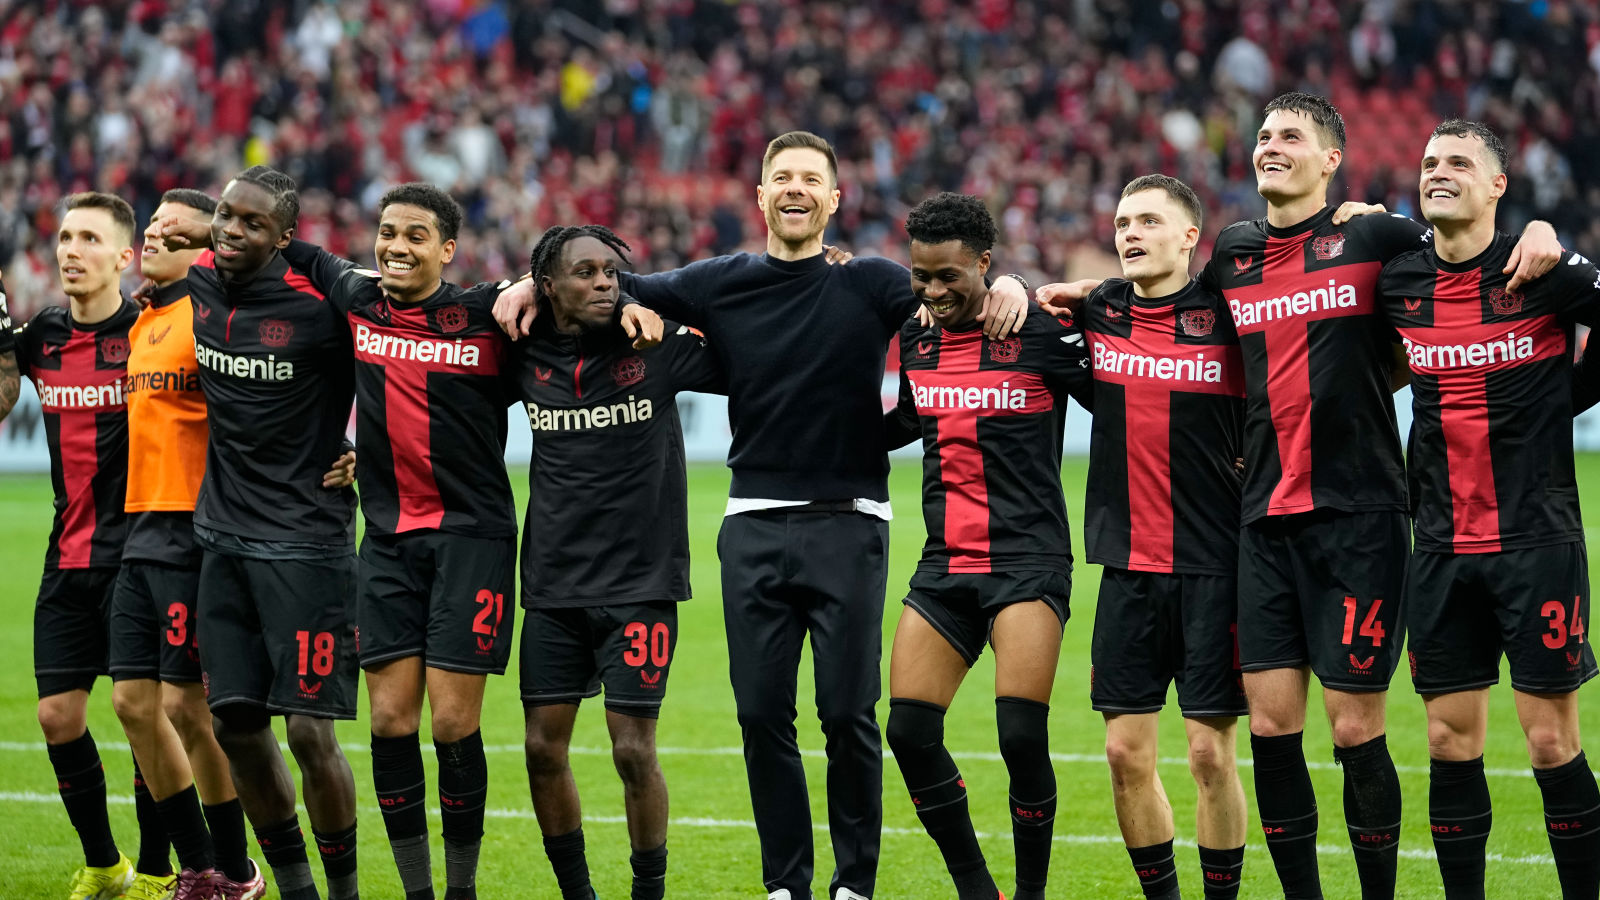 Bayer Leverkusen can win the Bundesliga title today